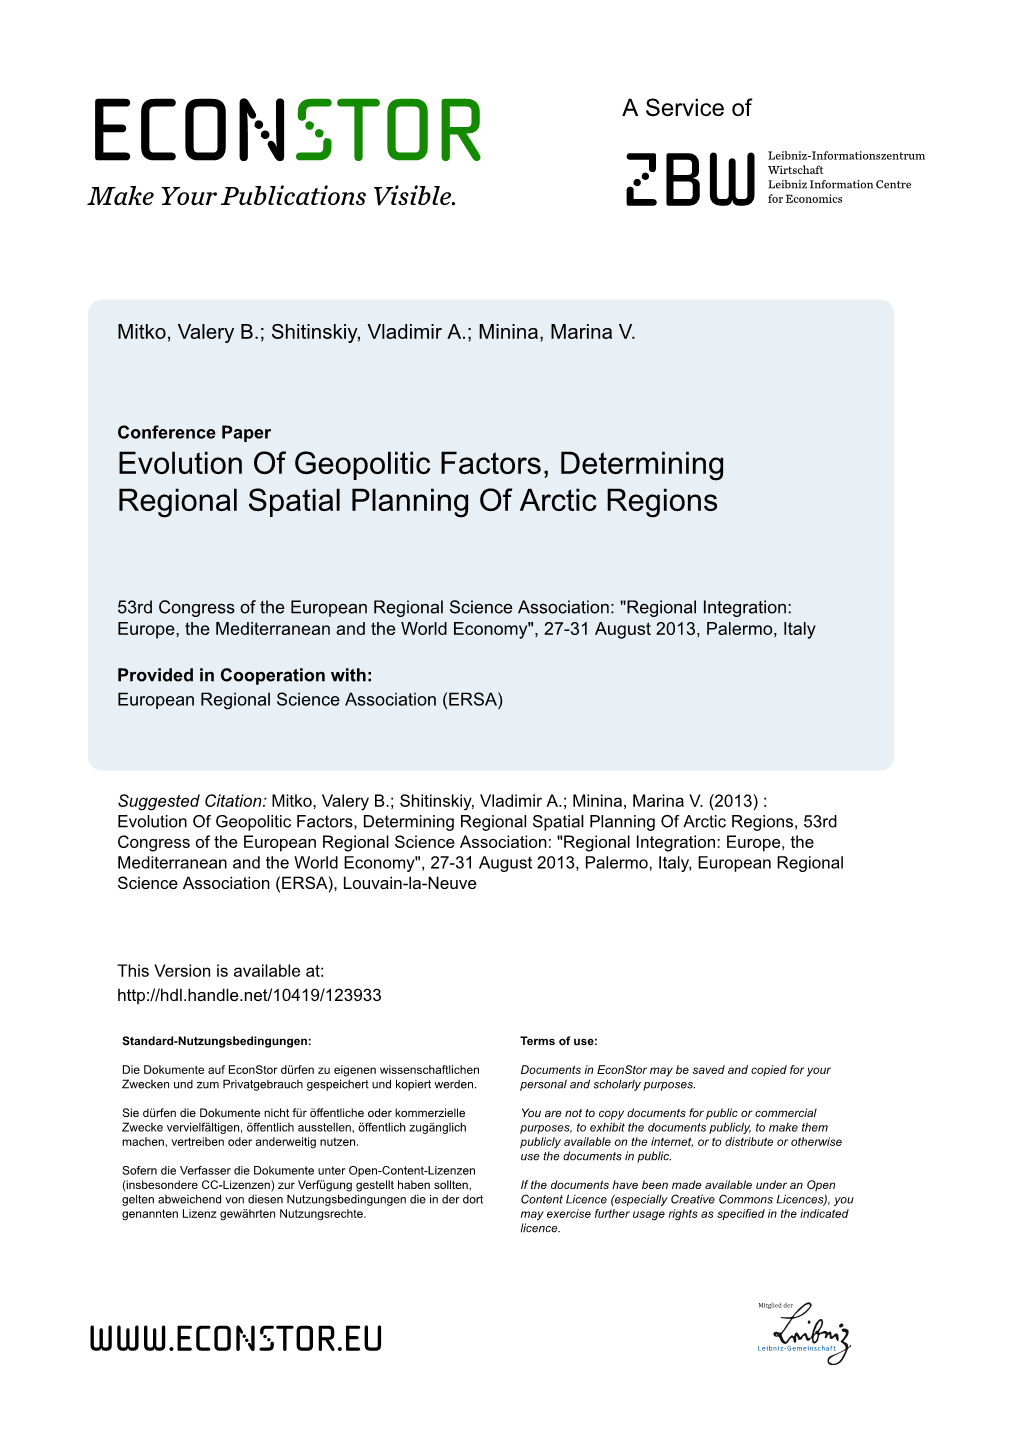 Evolution of Geopolitic Factors, Determining Regional Spatial Planning of Arctic Regions